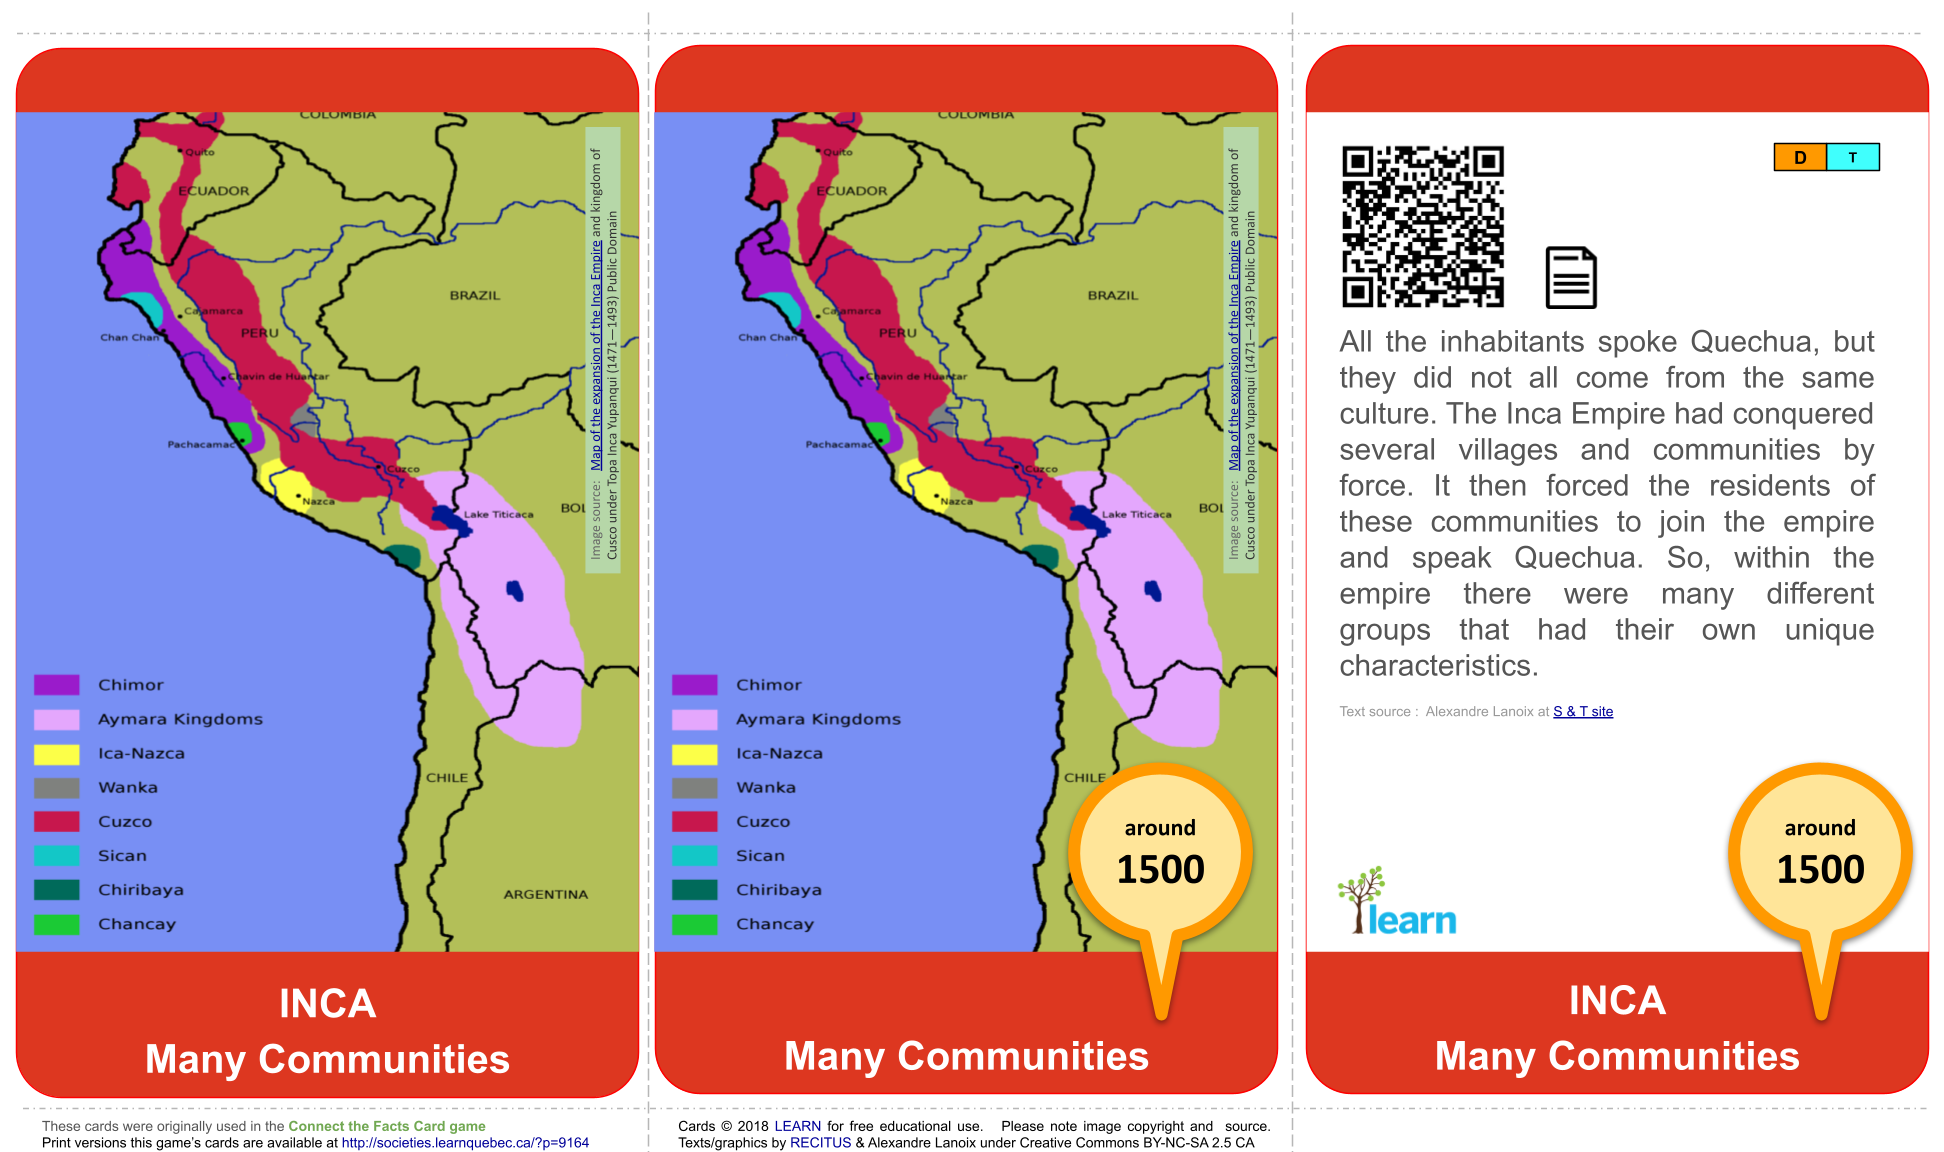 Inca: Many communities